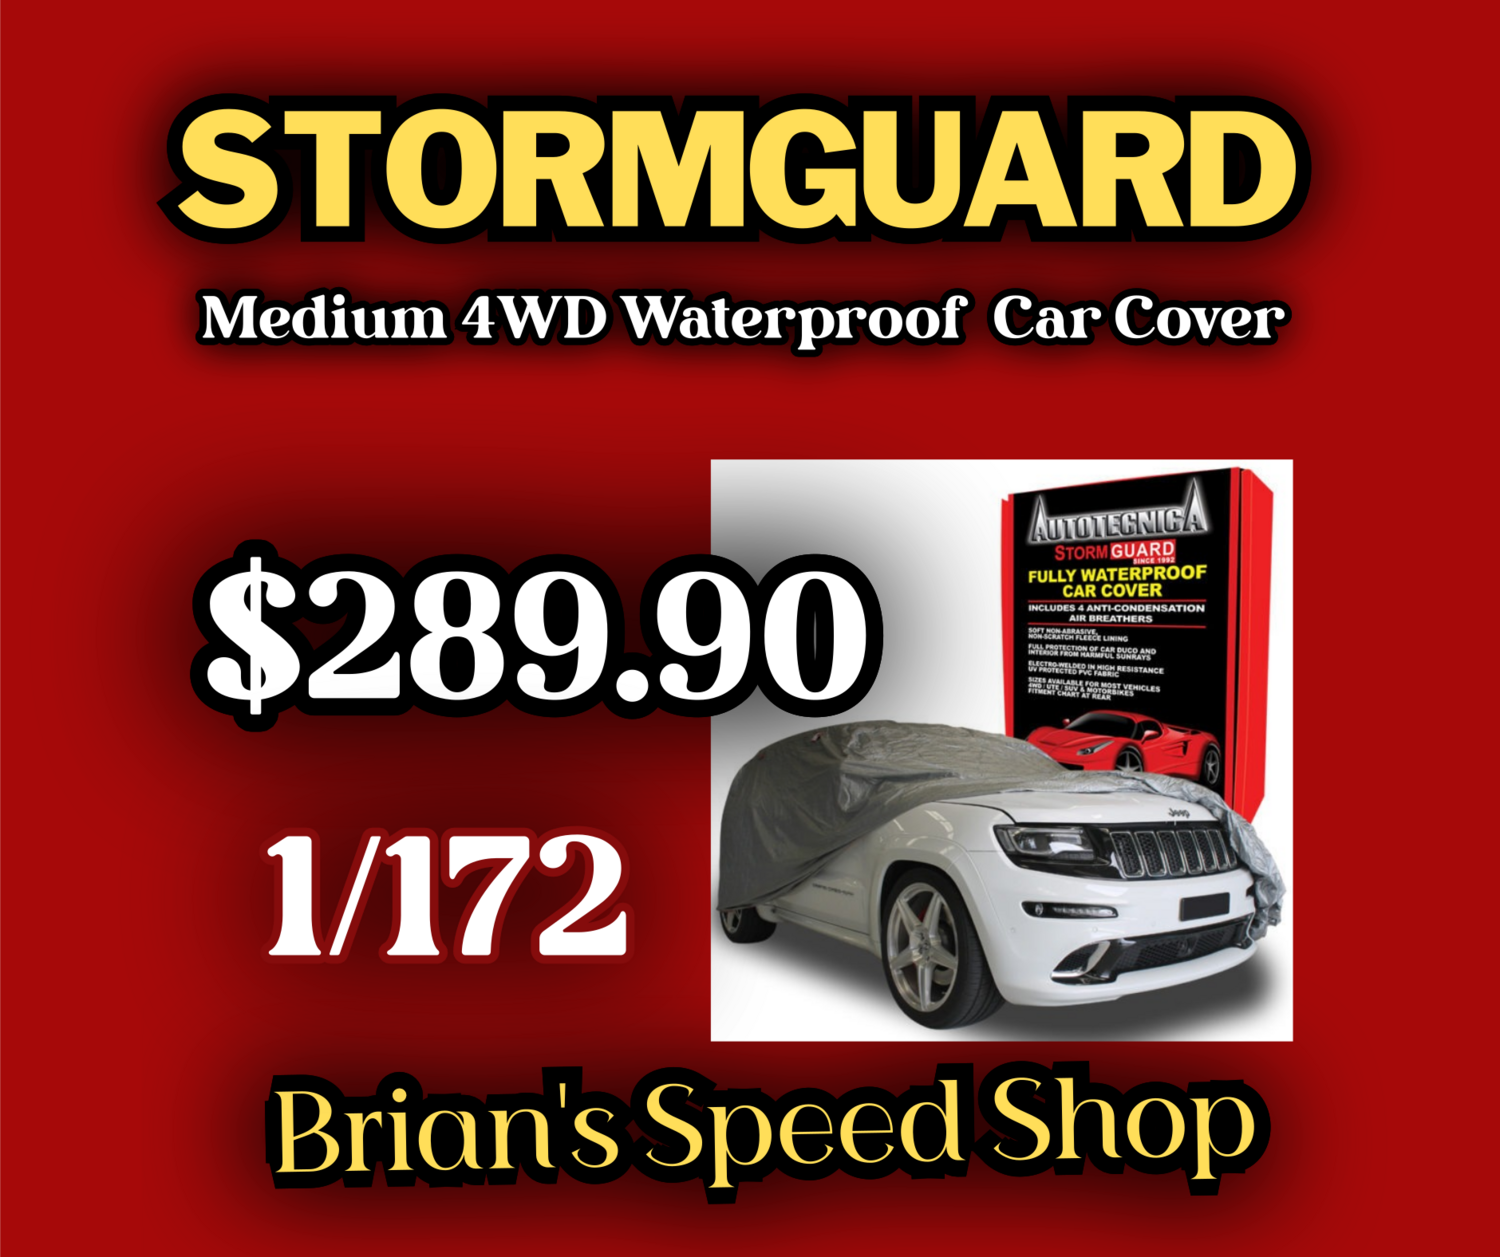 Stormguard  4WD   Medium 1/172 fully waterproof Car Covers Free Shipping  $289.90